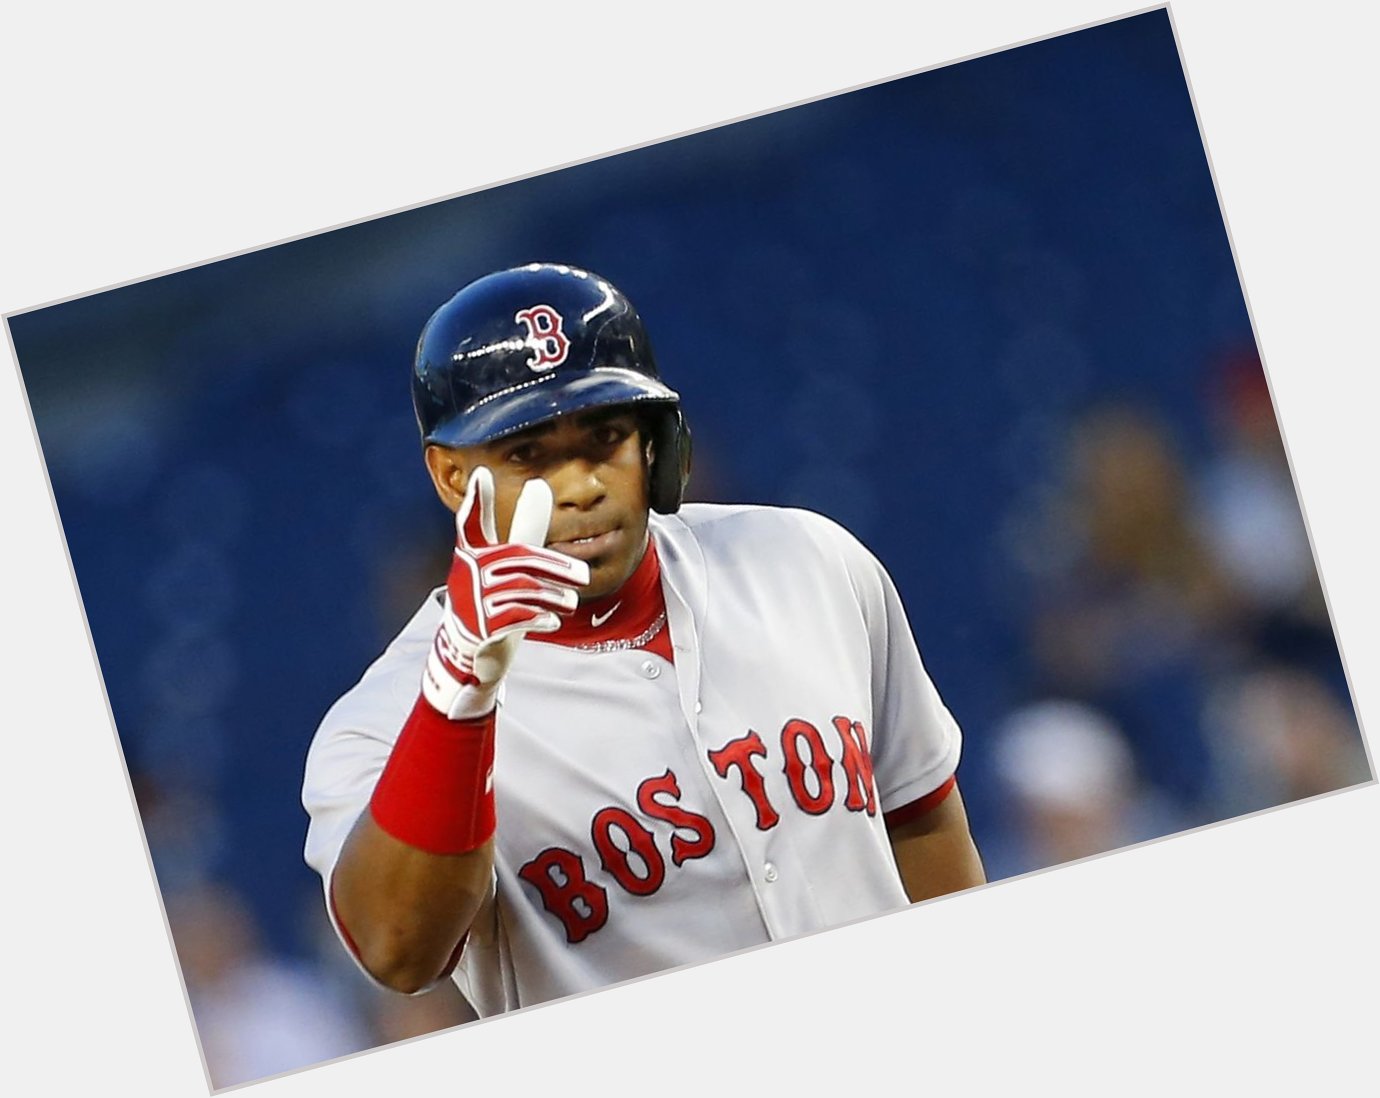 Happy birthday to Boston Red Sox legend, Yoenis Cespedes! 